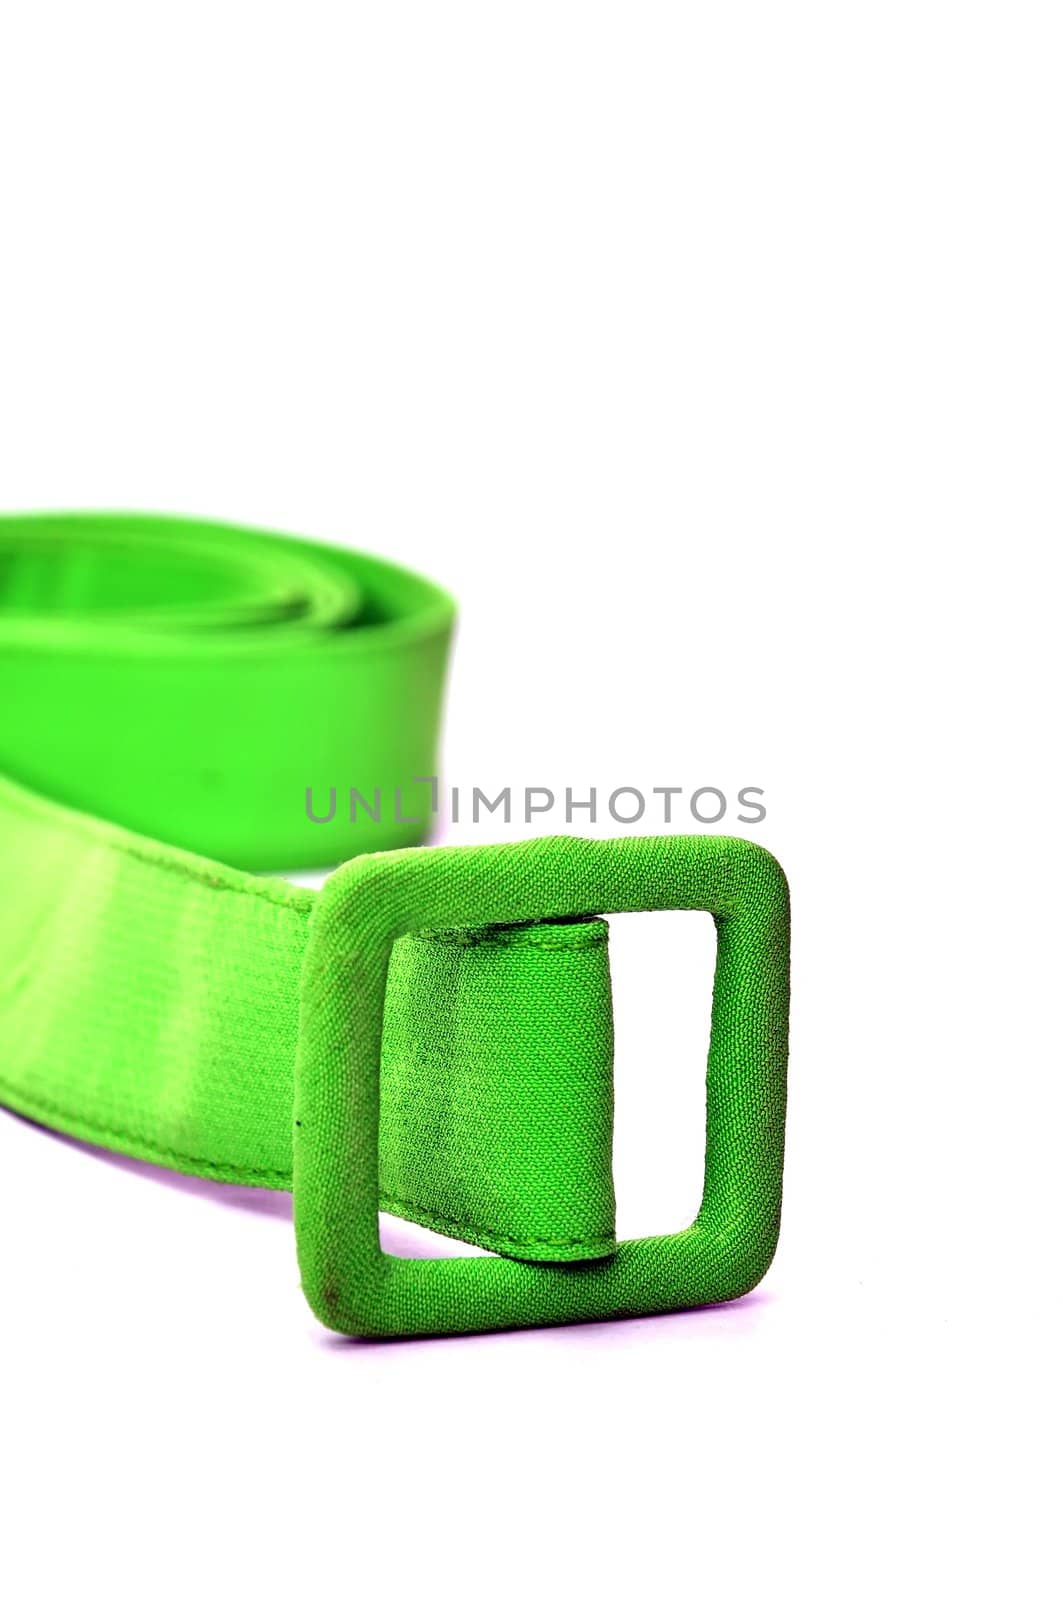 Green belt by phanlop88